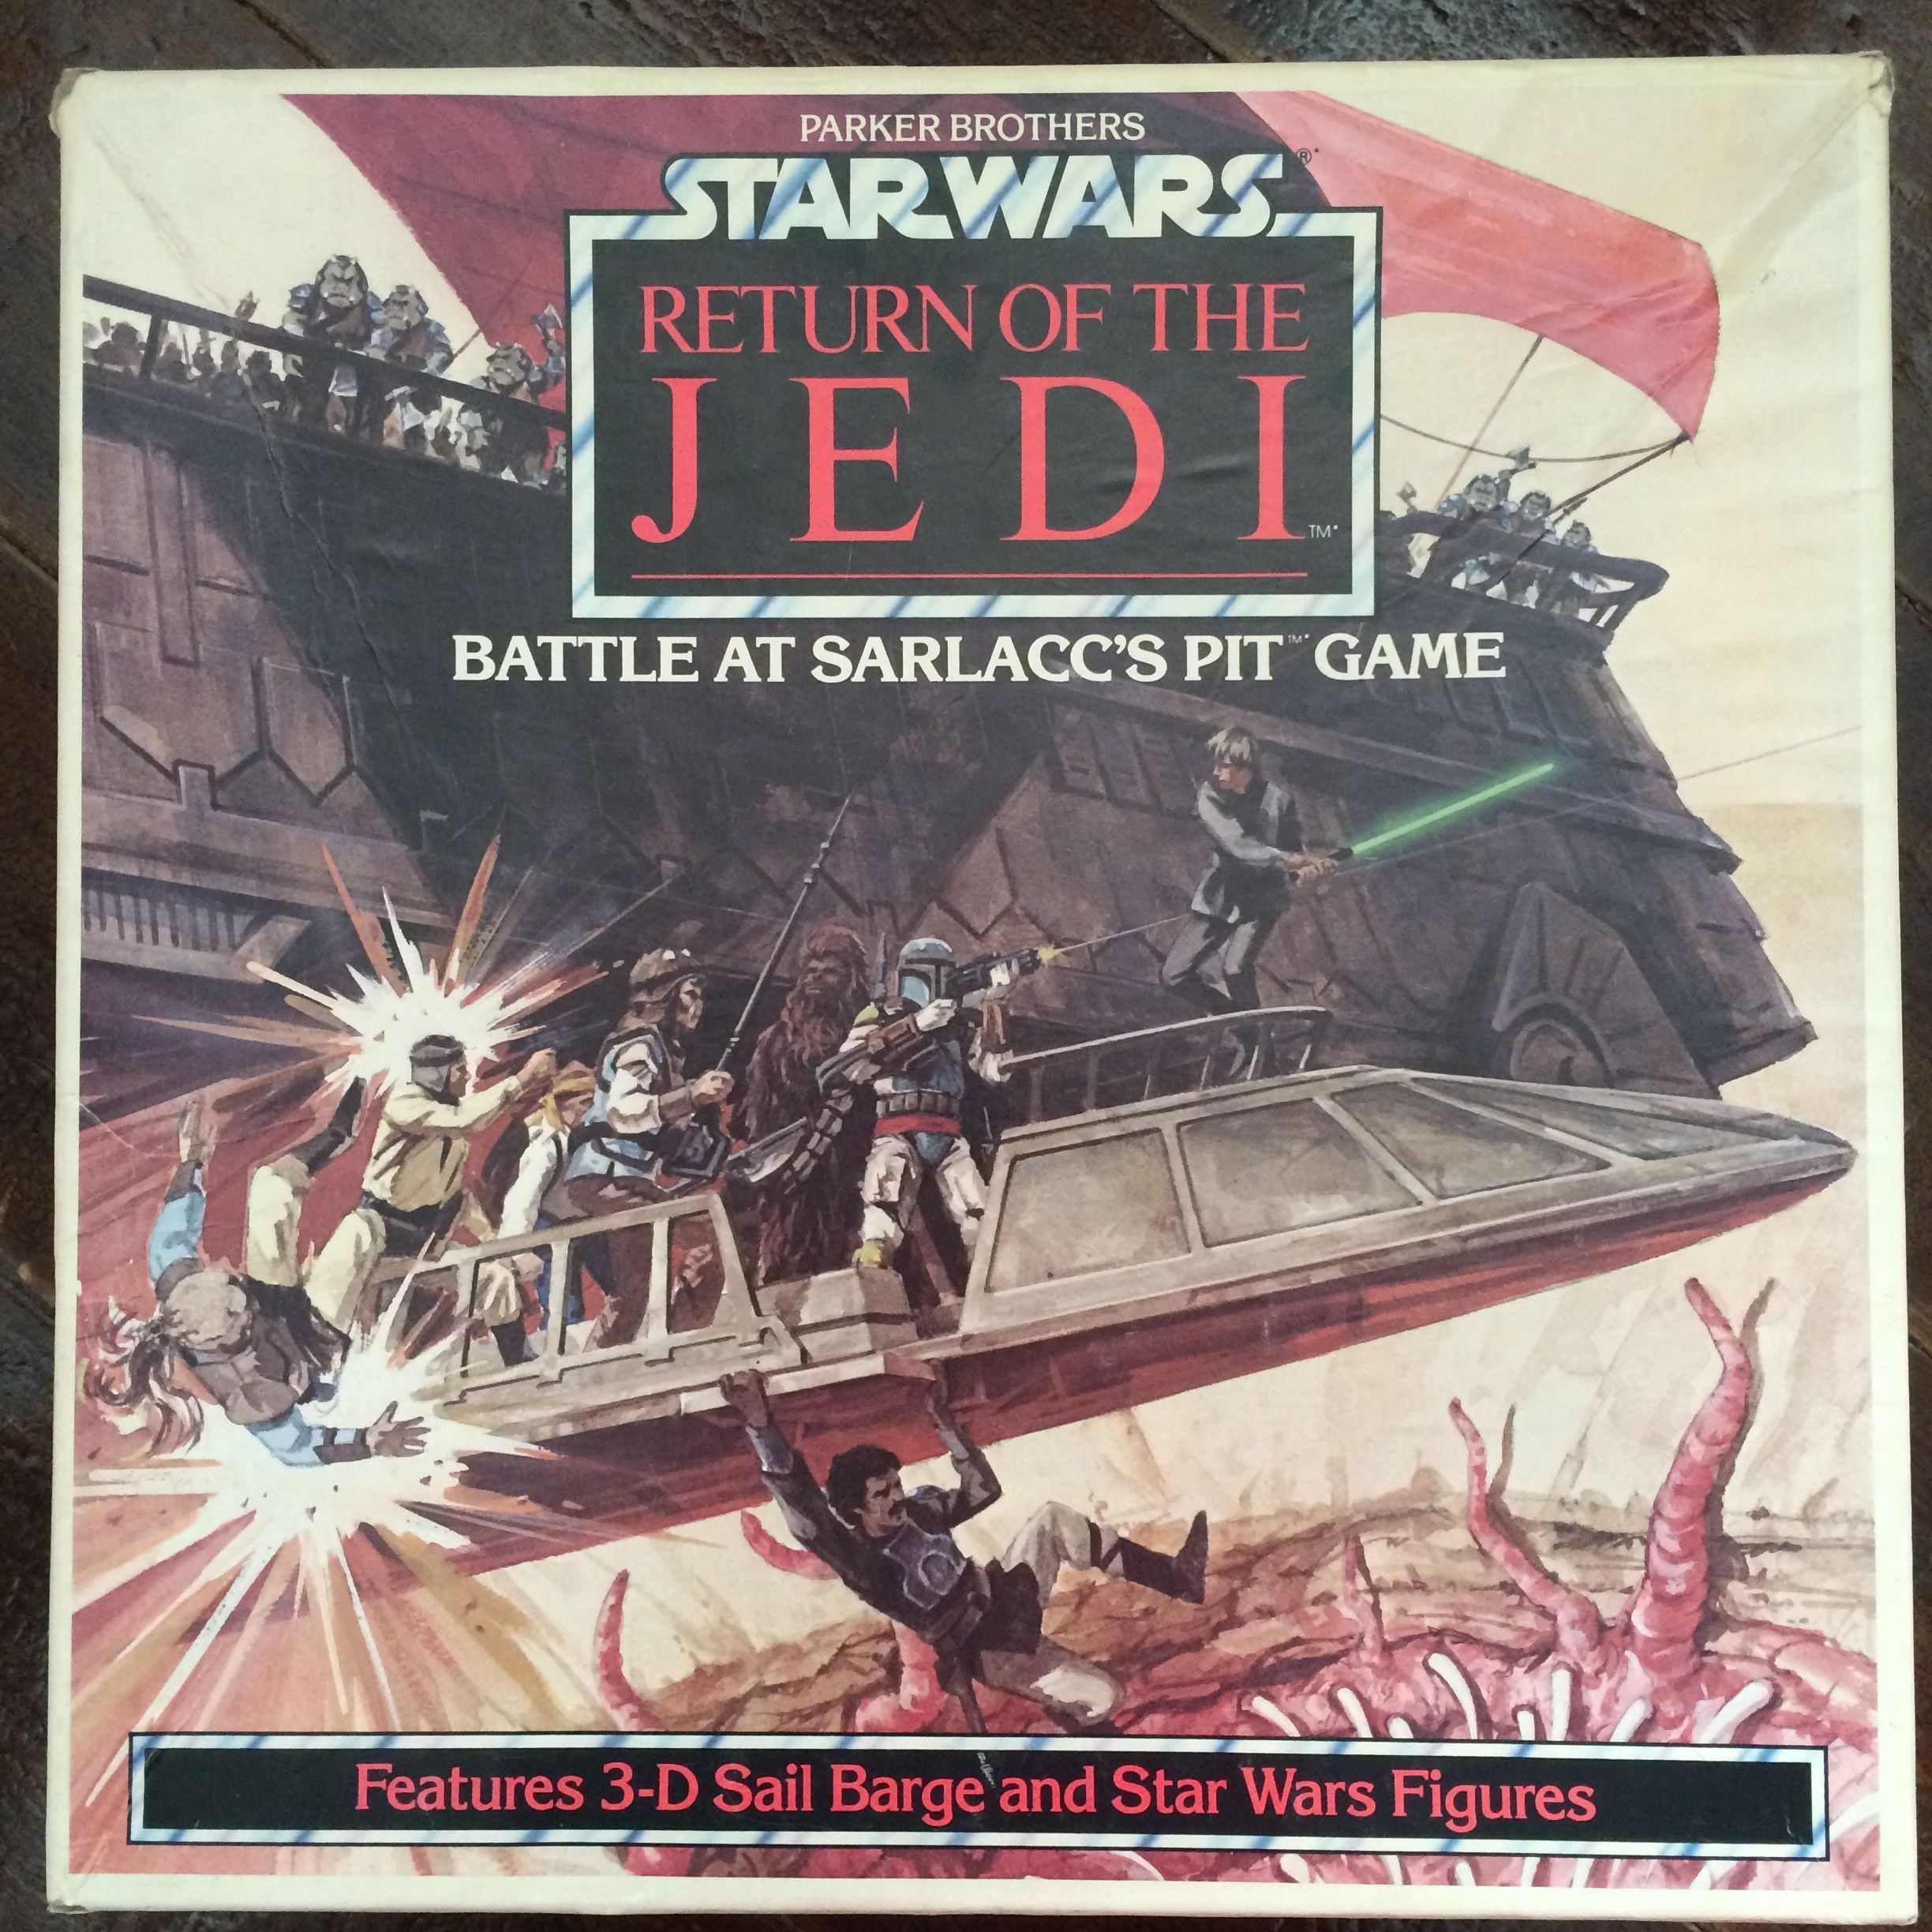 Star Wars: Return of the Jedi – Battle at Sarlacc's Pit